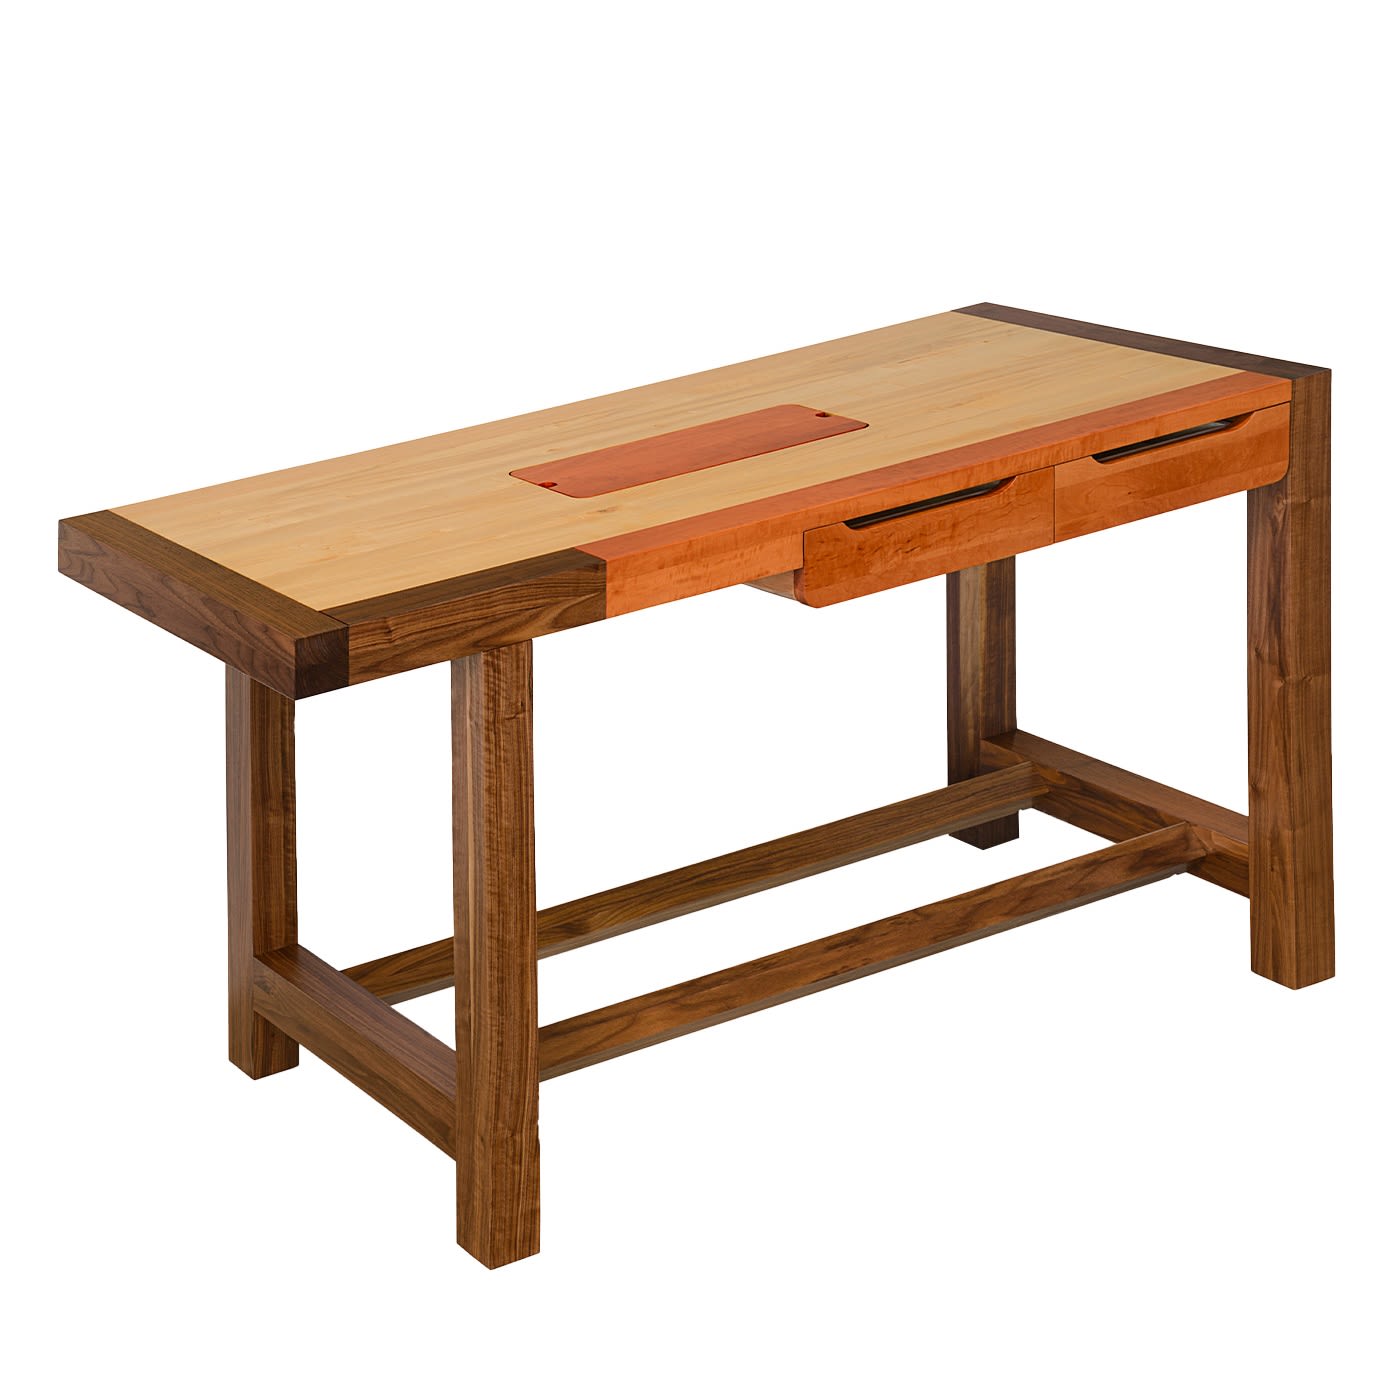 Marangon Table by Sabrina Carella & Sergio Magnano - Slow Wood by Gianni Cantarutti